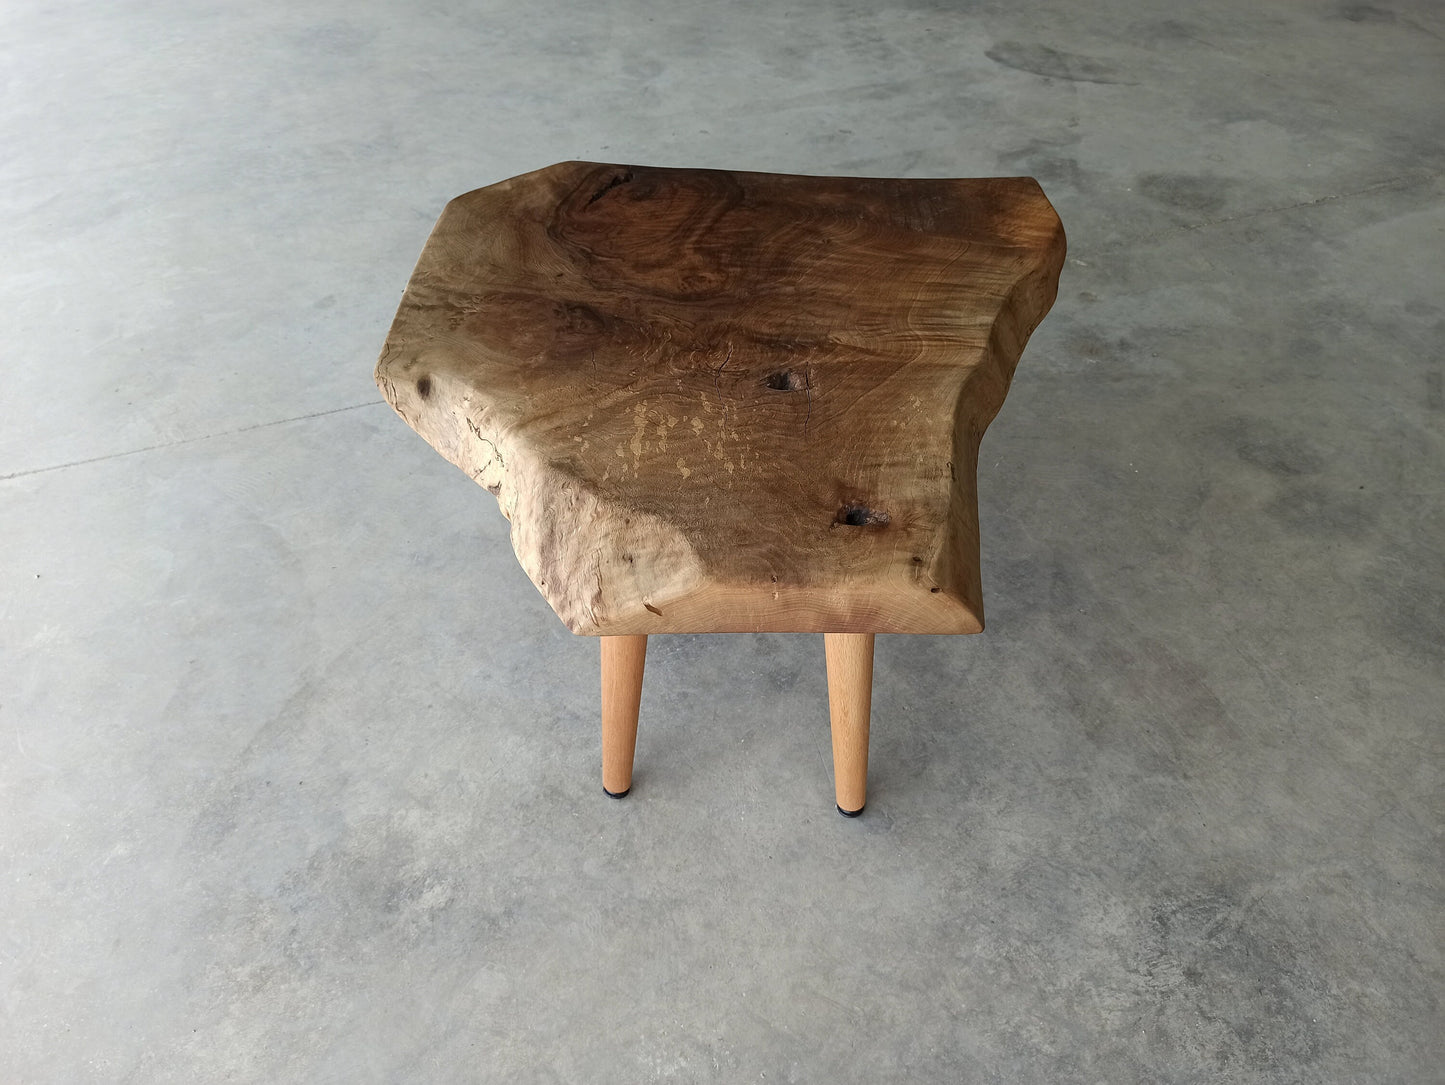 Christmas Gift - Rustic Handmade Wood Coffee Table - Unique Walnut (WG-010)